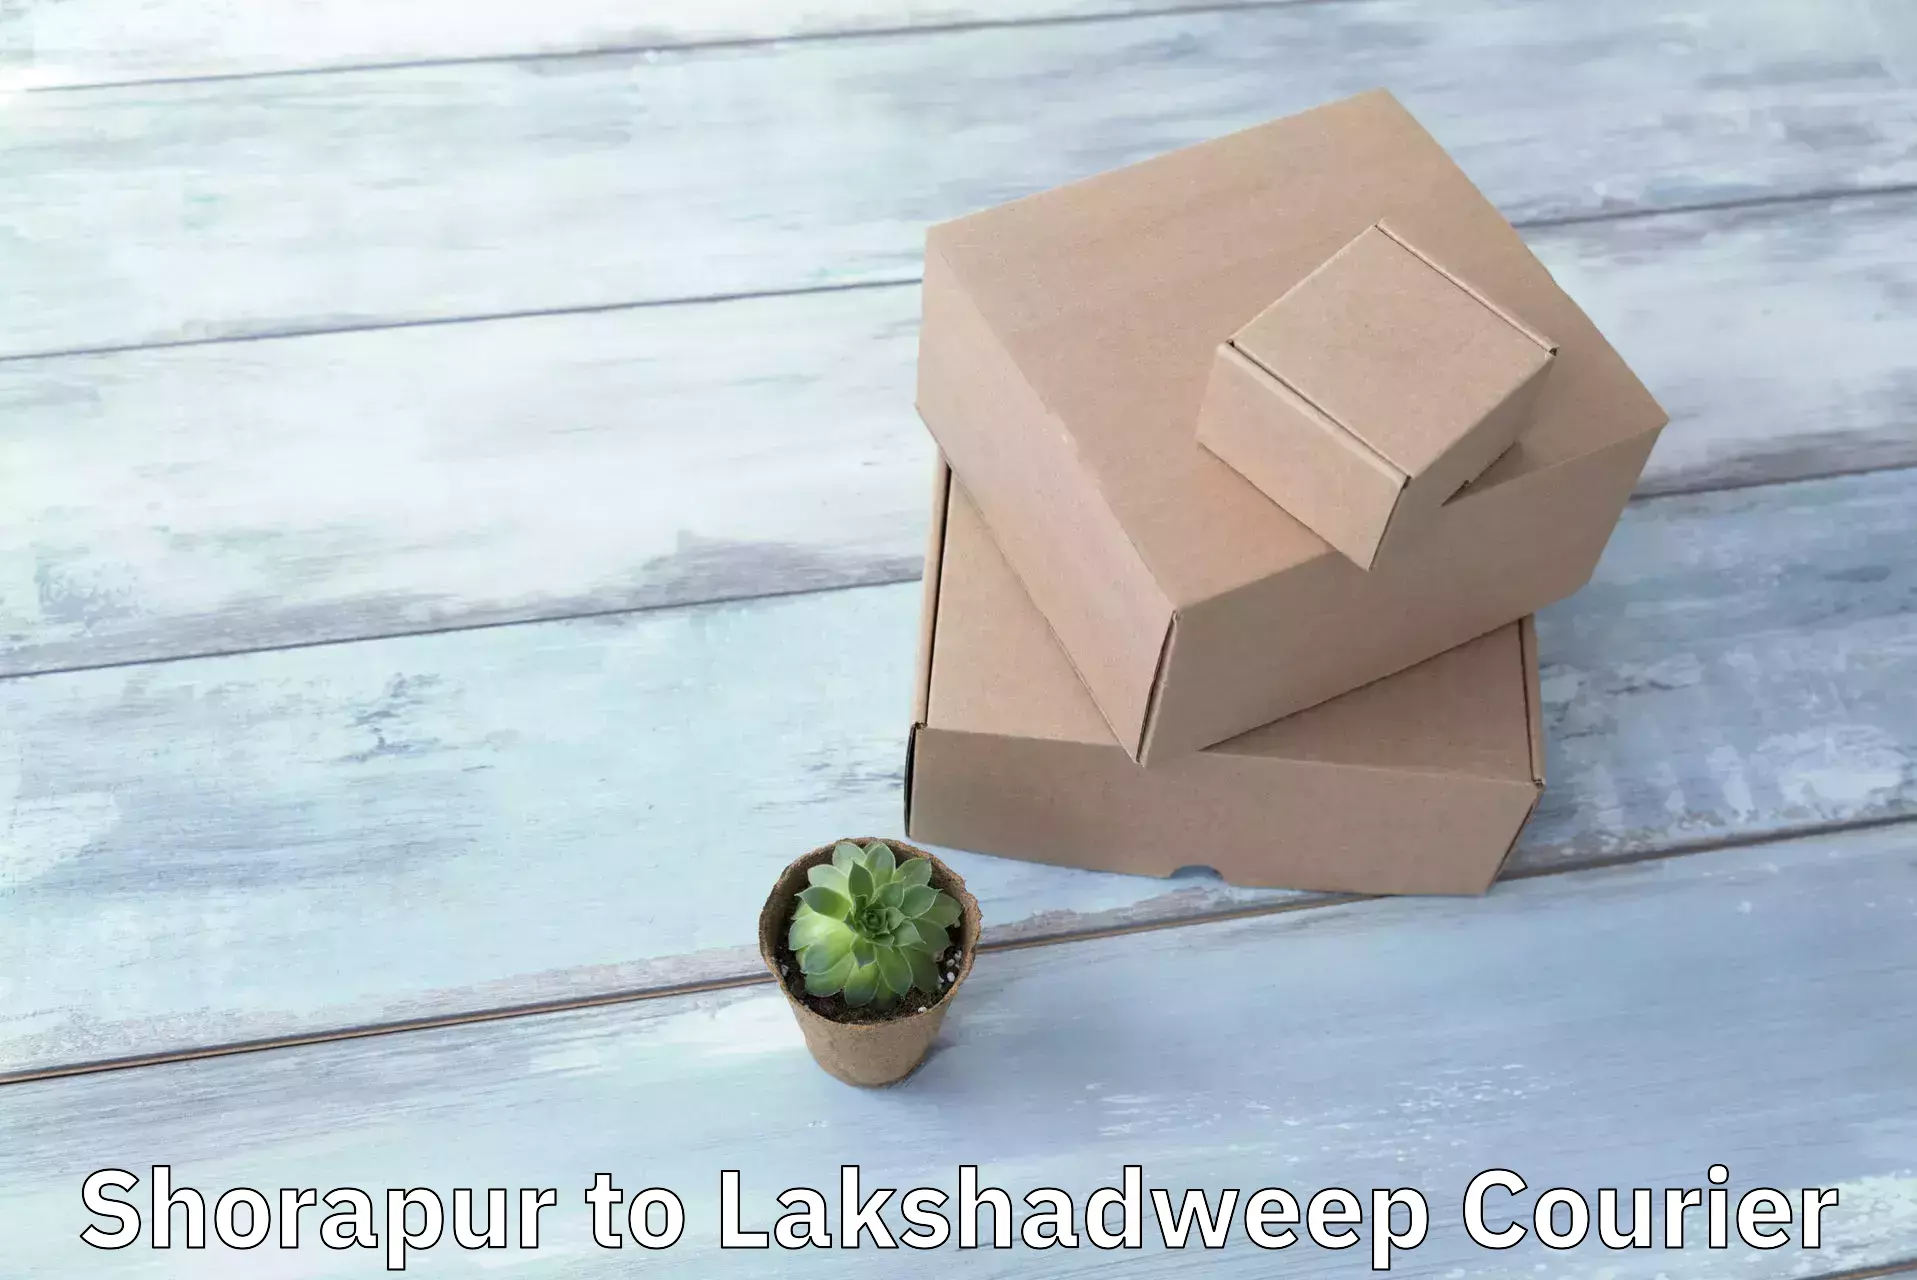 Digital courier platforms Shorapur to Lakshadweep